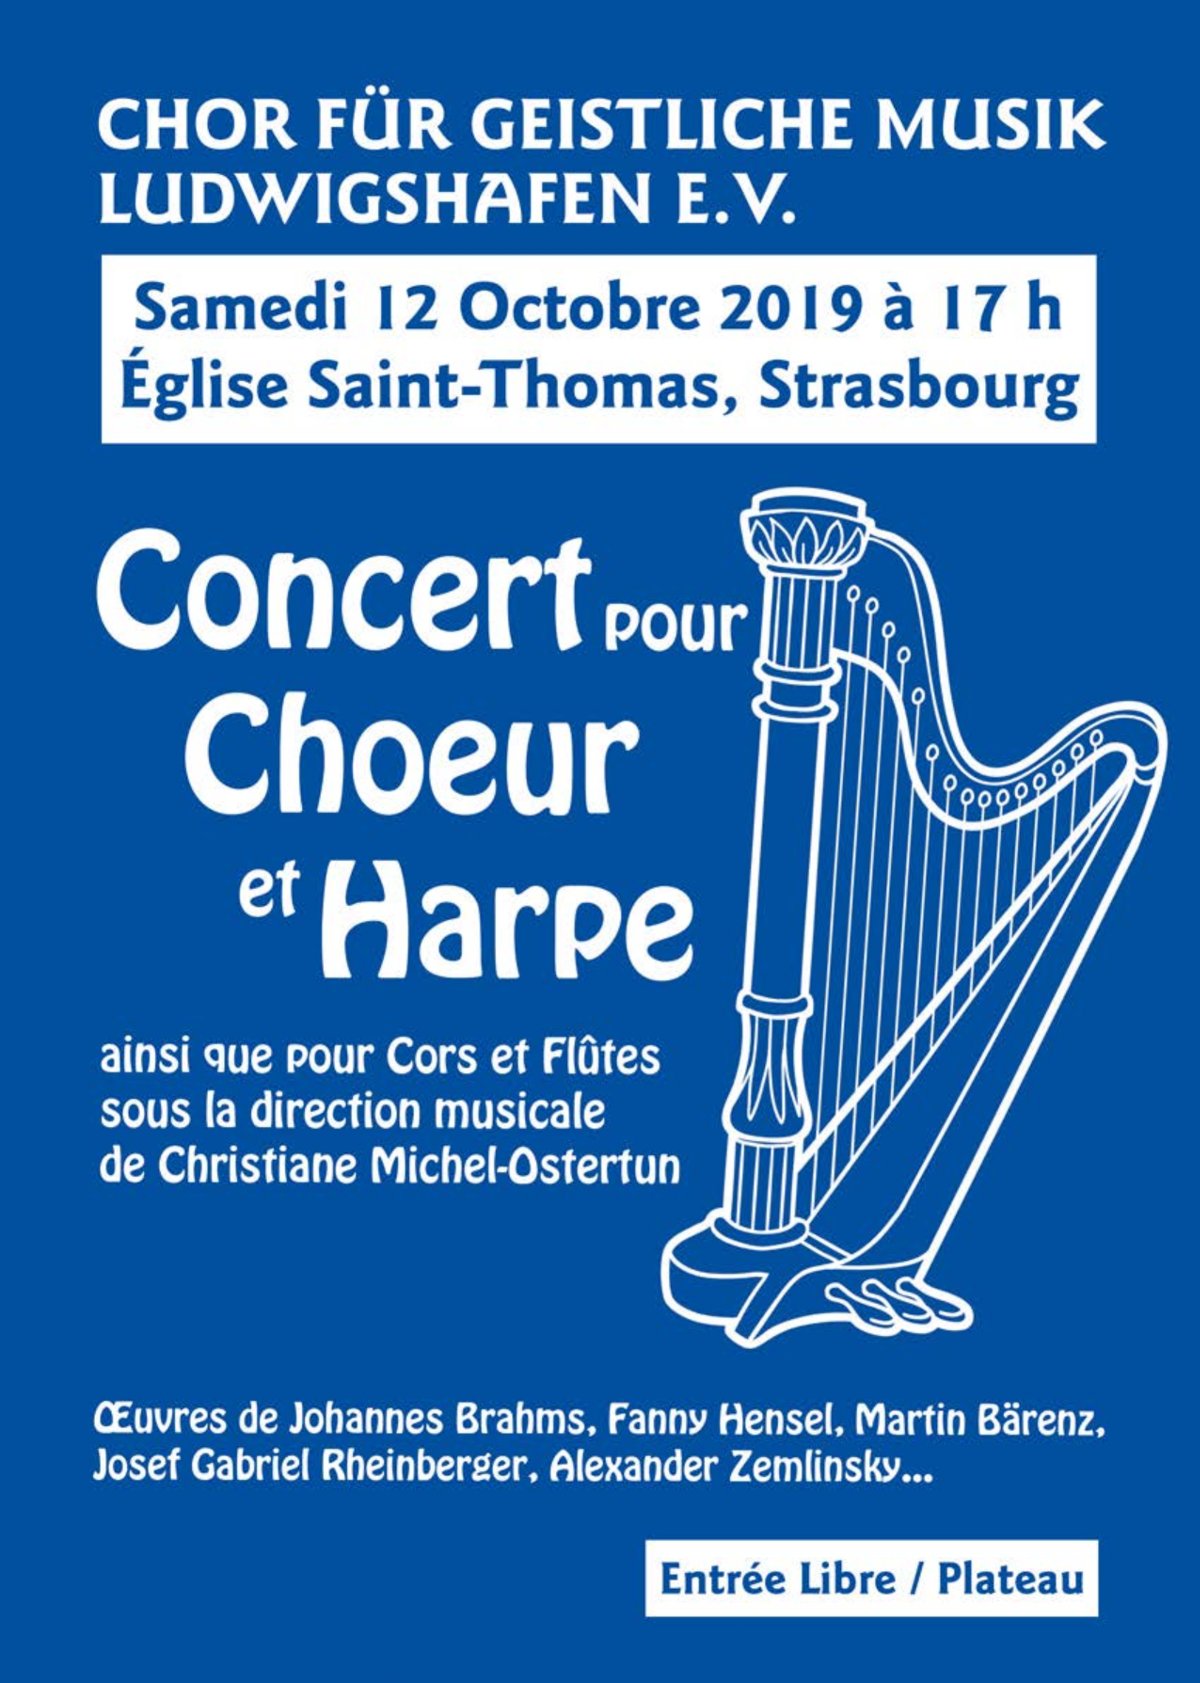 concert-choeur-harpe-saint-thomas-strasbourg